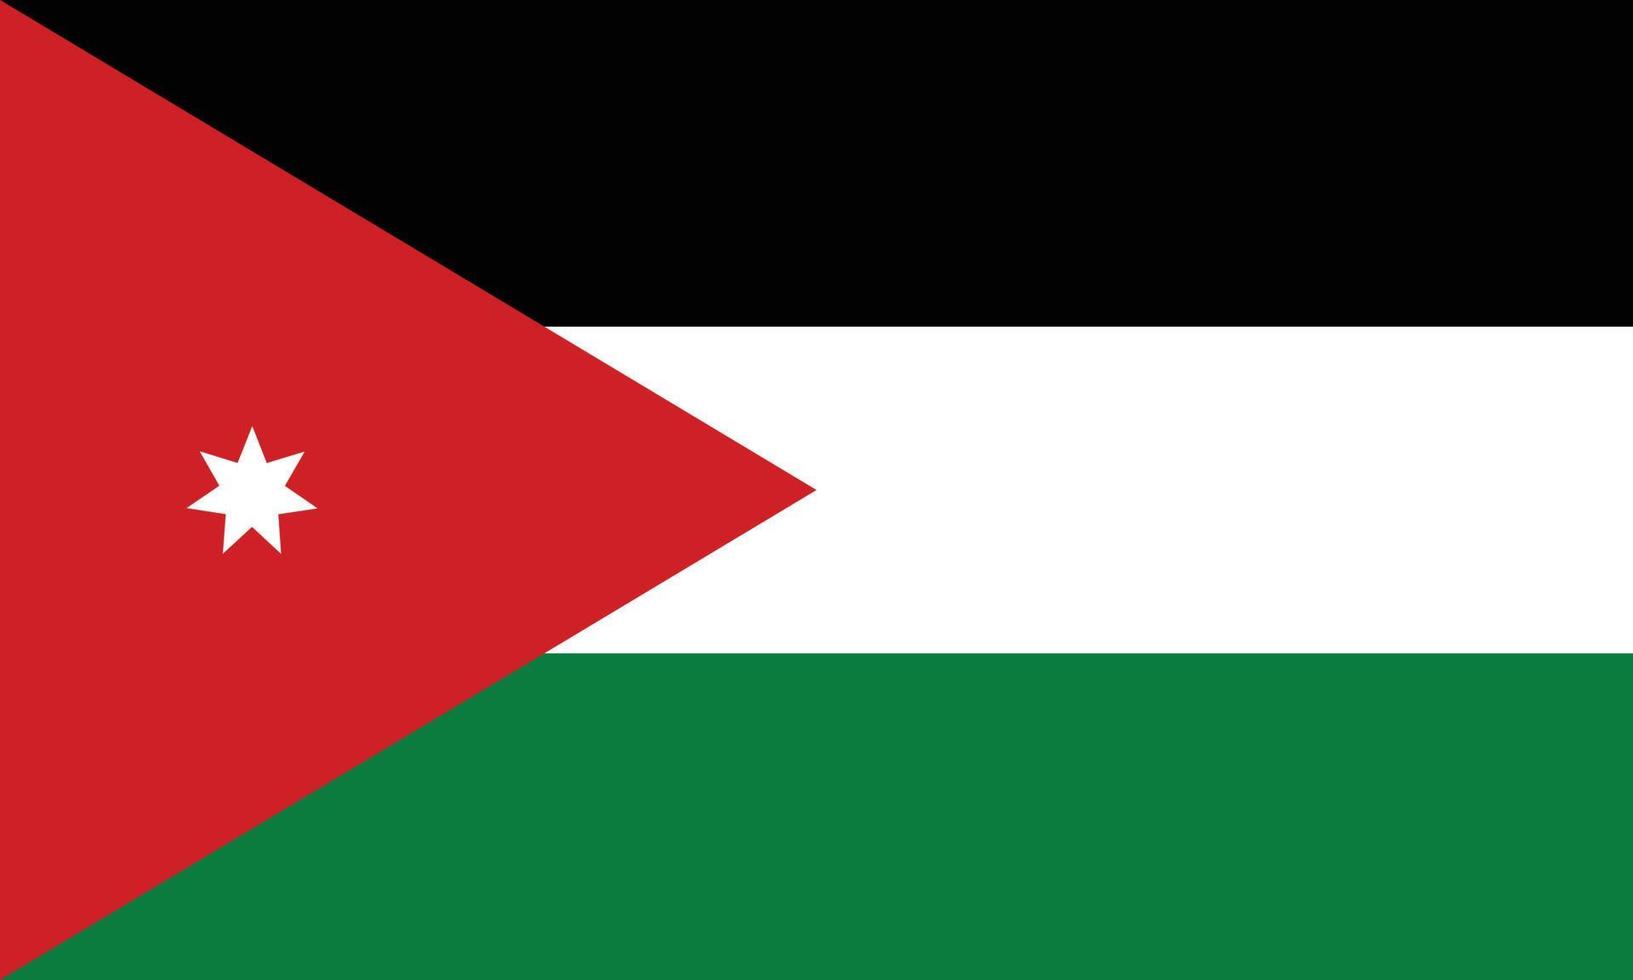 Jordan national flag vector illustration